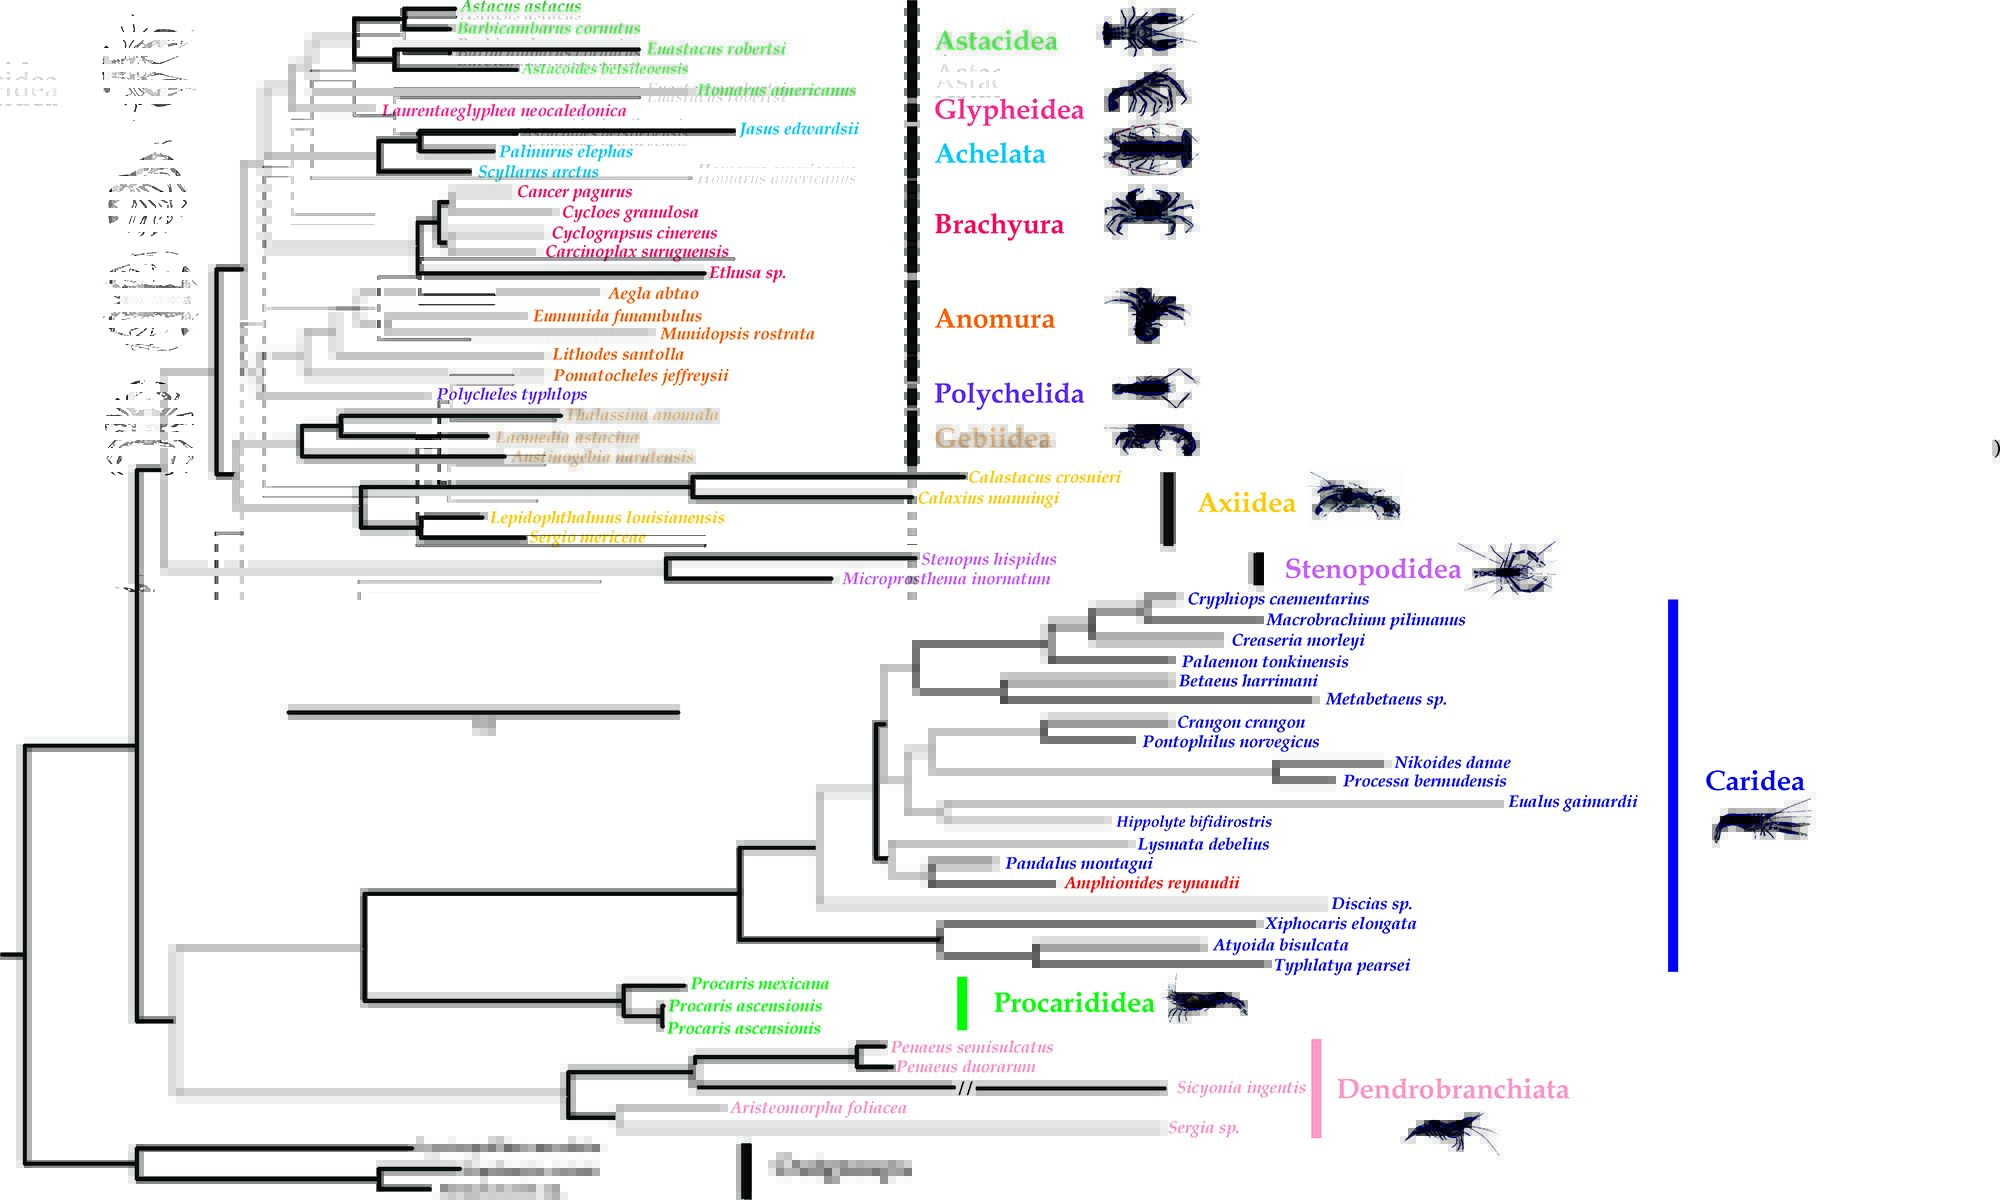 write a brief essay on arthropods evolution